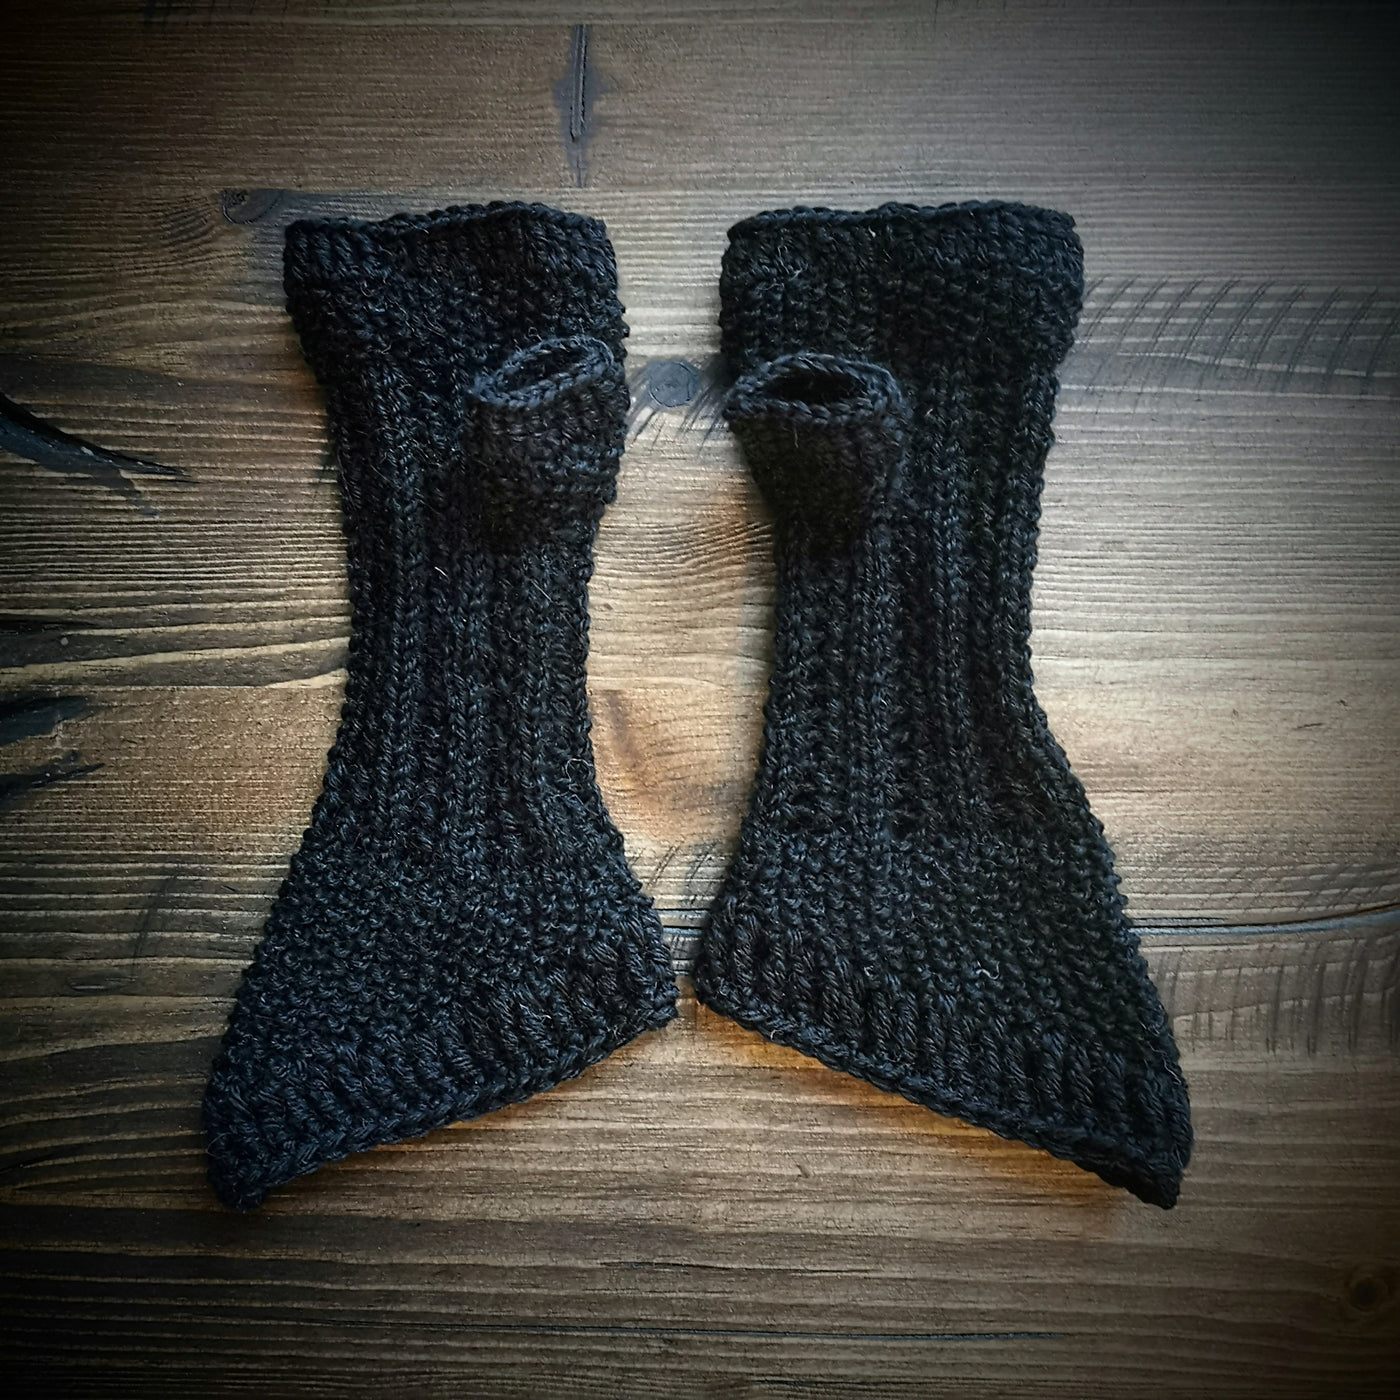 Handmade knitted pitch black wrist warmers